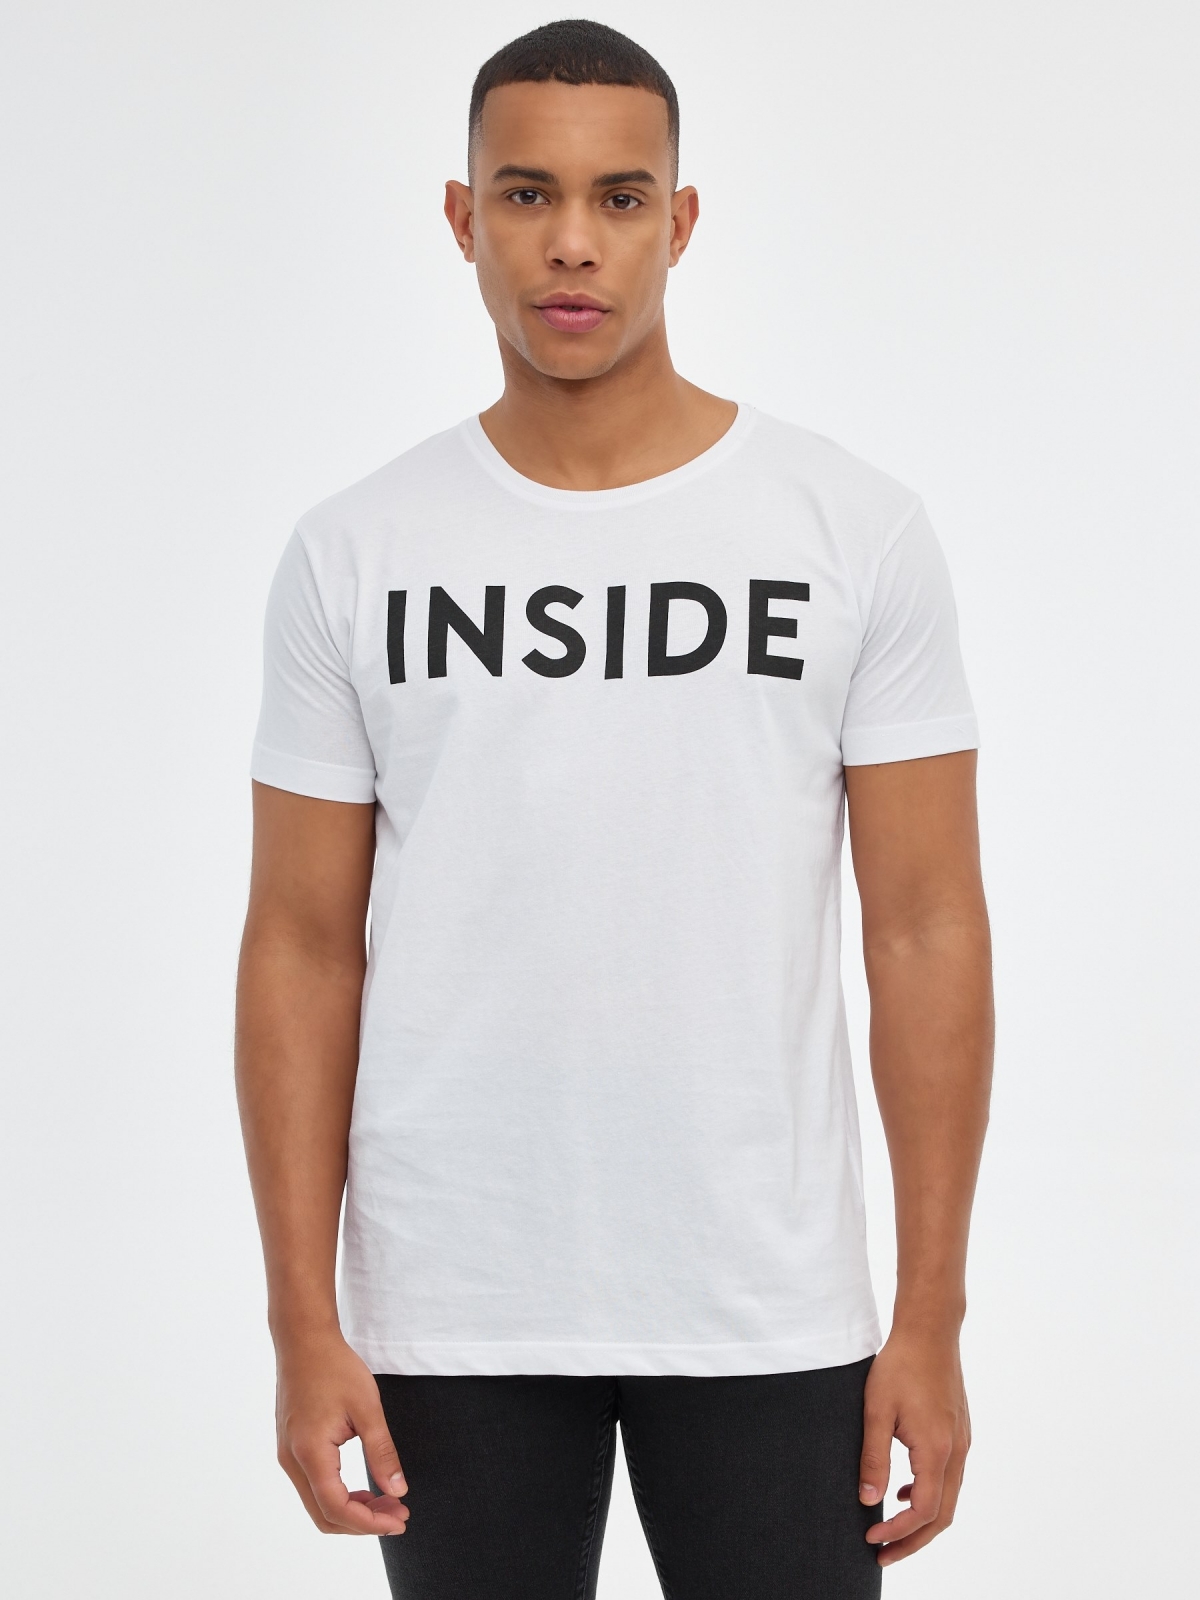 Camiseta básica "INSIDE" blanco vista media frontal